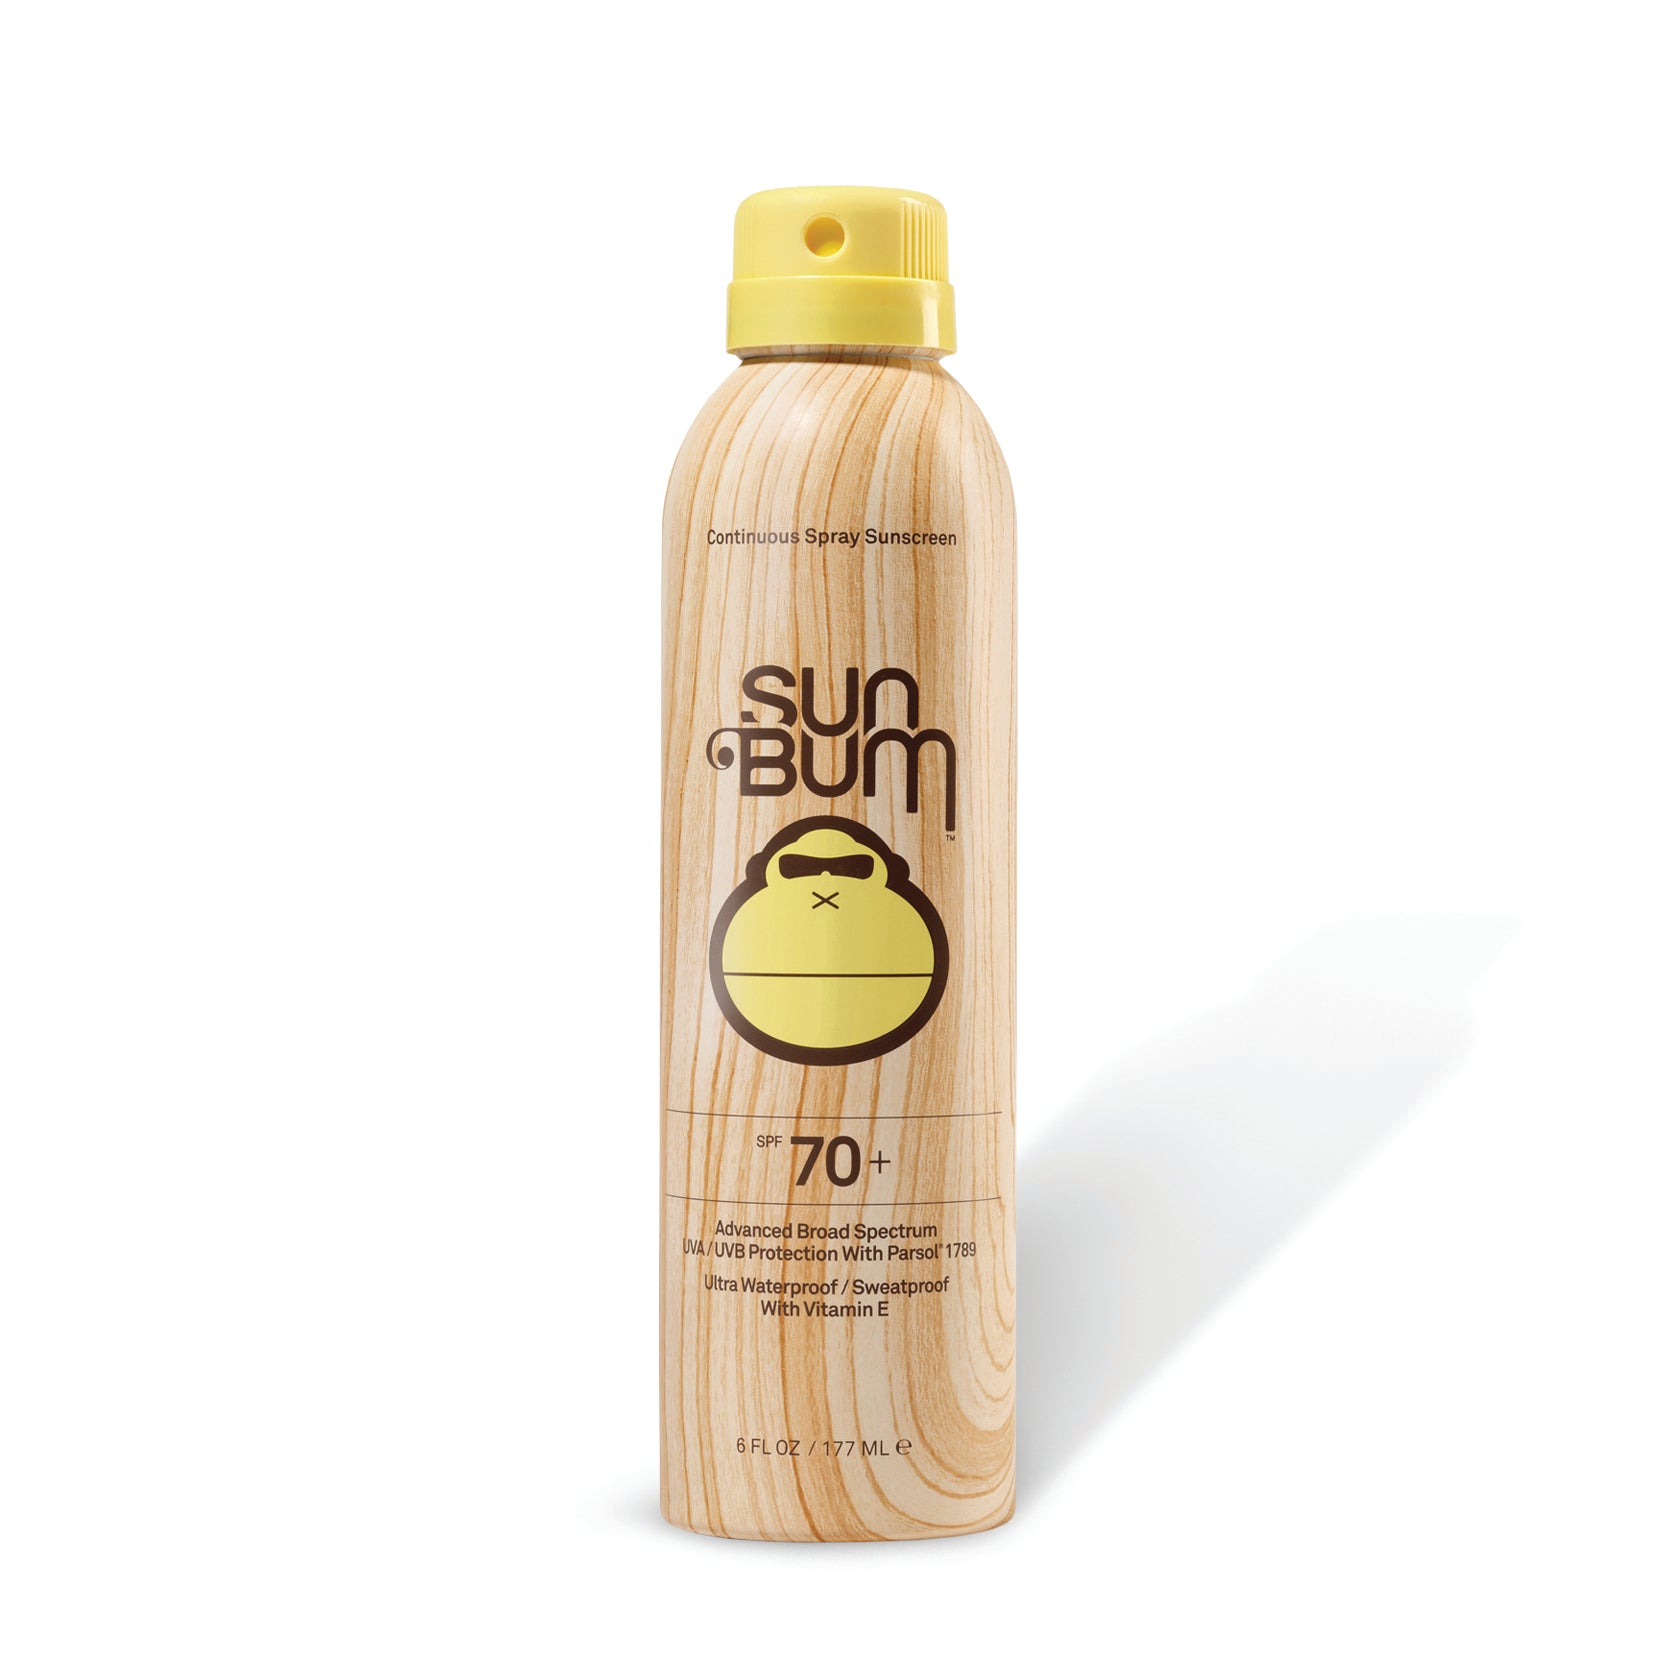 Sun Bum Original Sunscreen Spray SPF 70 / 6OZ